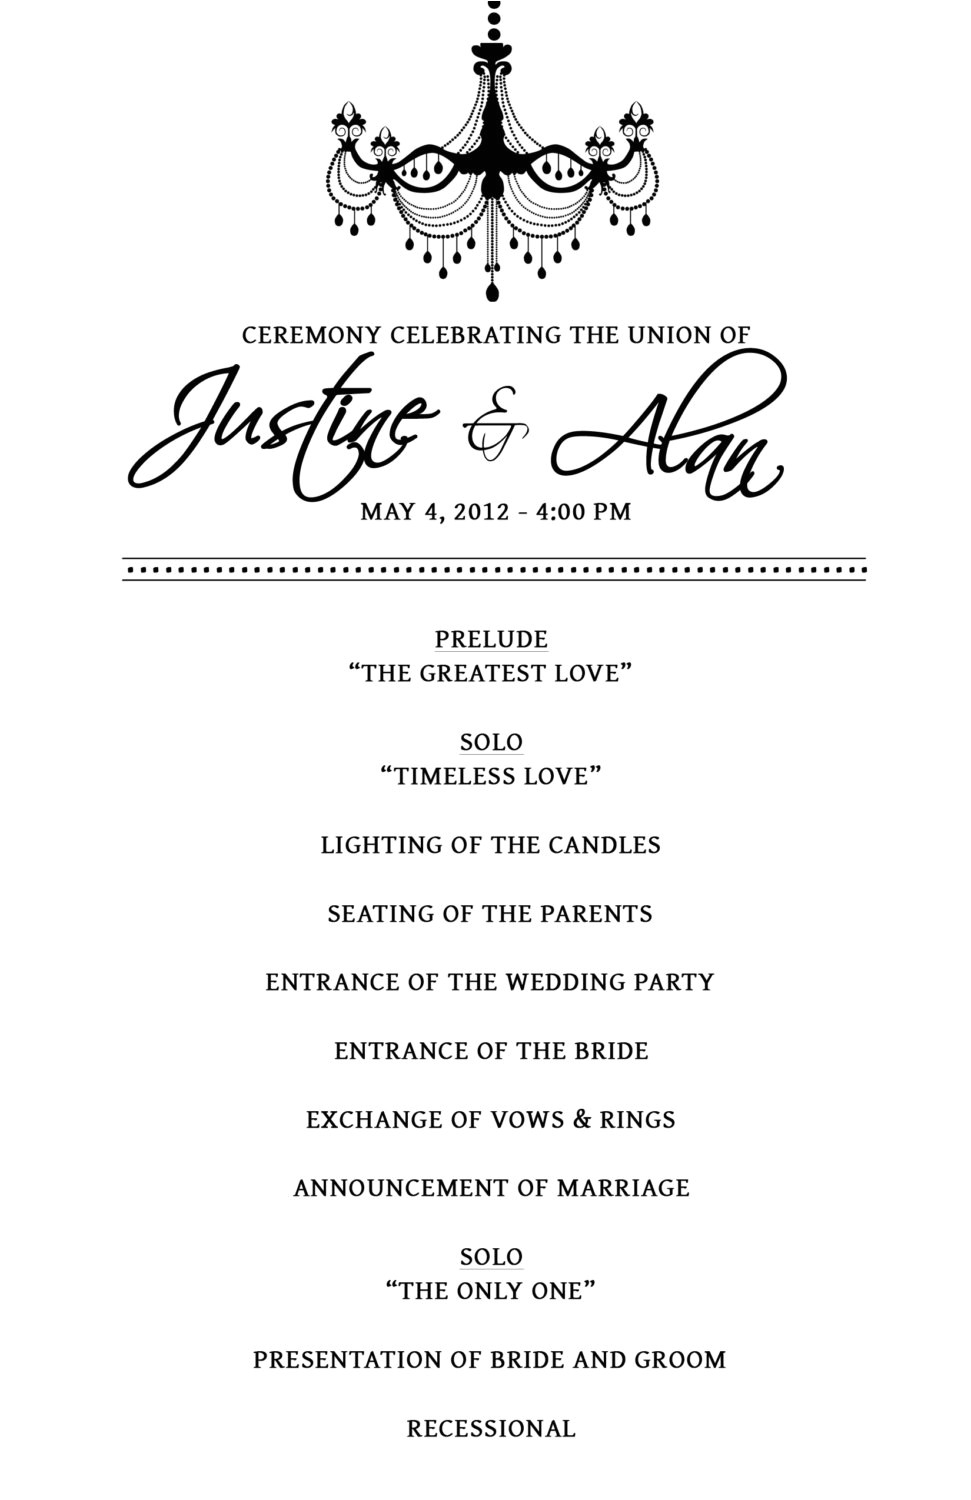 wedding invitations template set psd